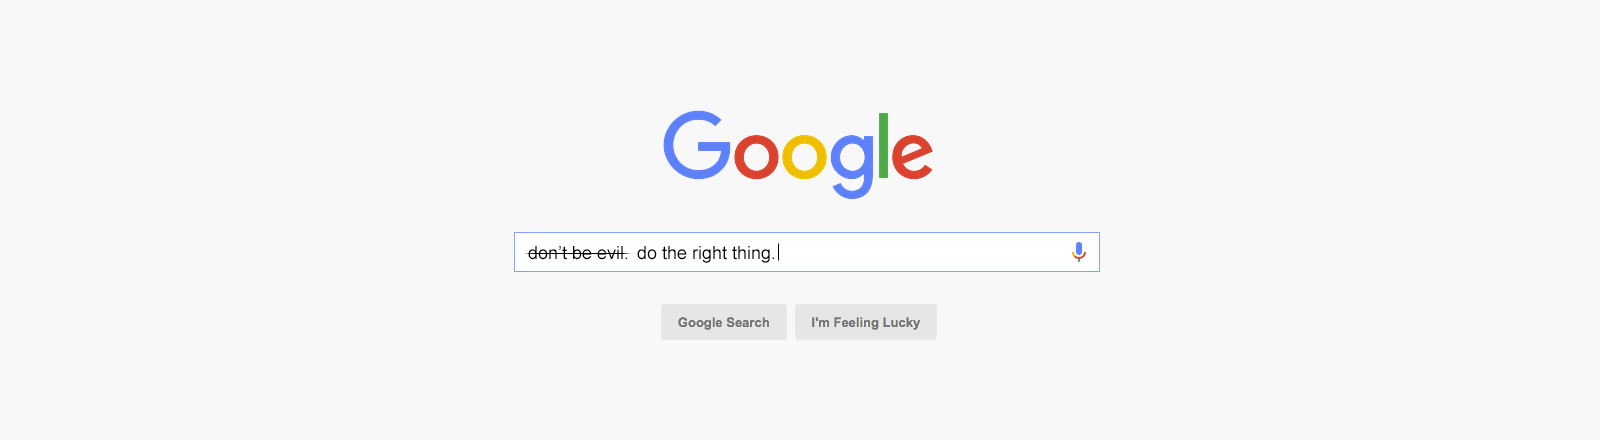 Ok google м. Гуглить. Google do the right thing.